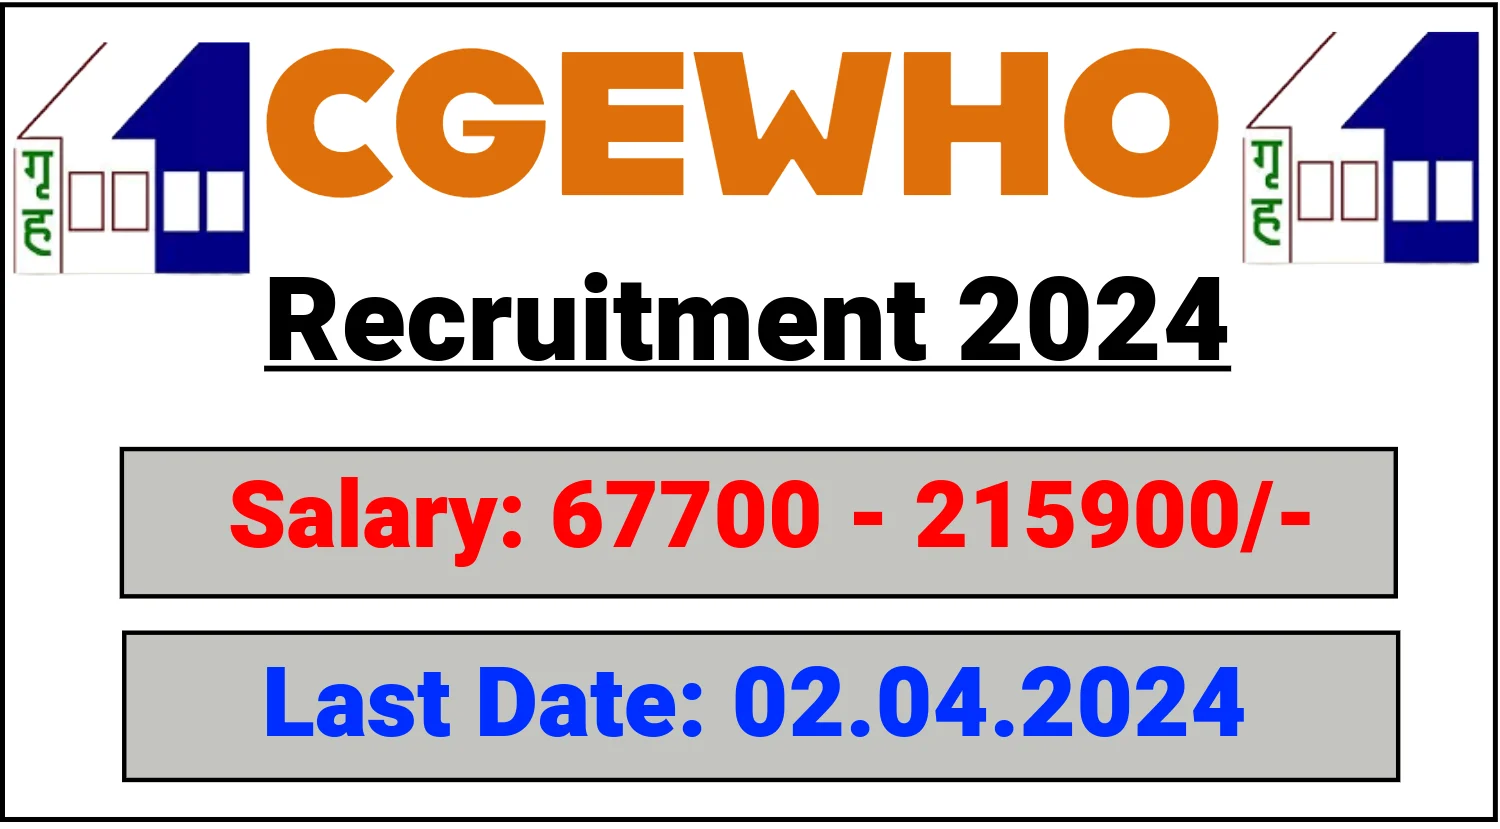 CGEWHO Recruitment 2024